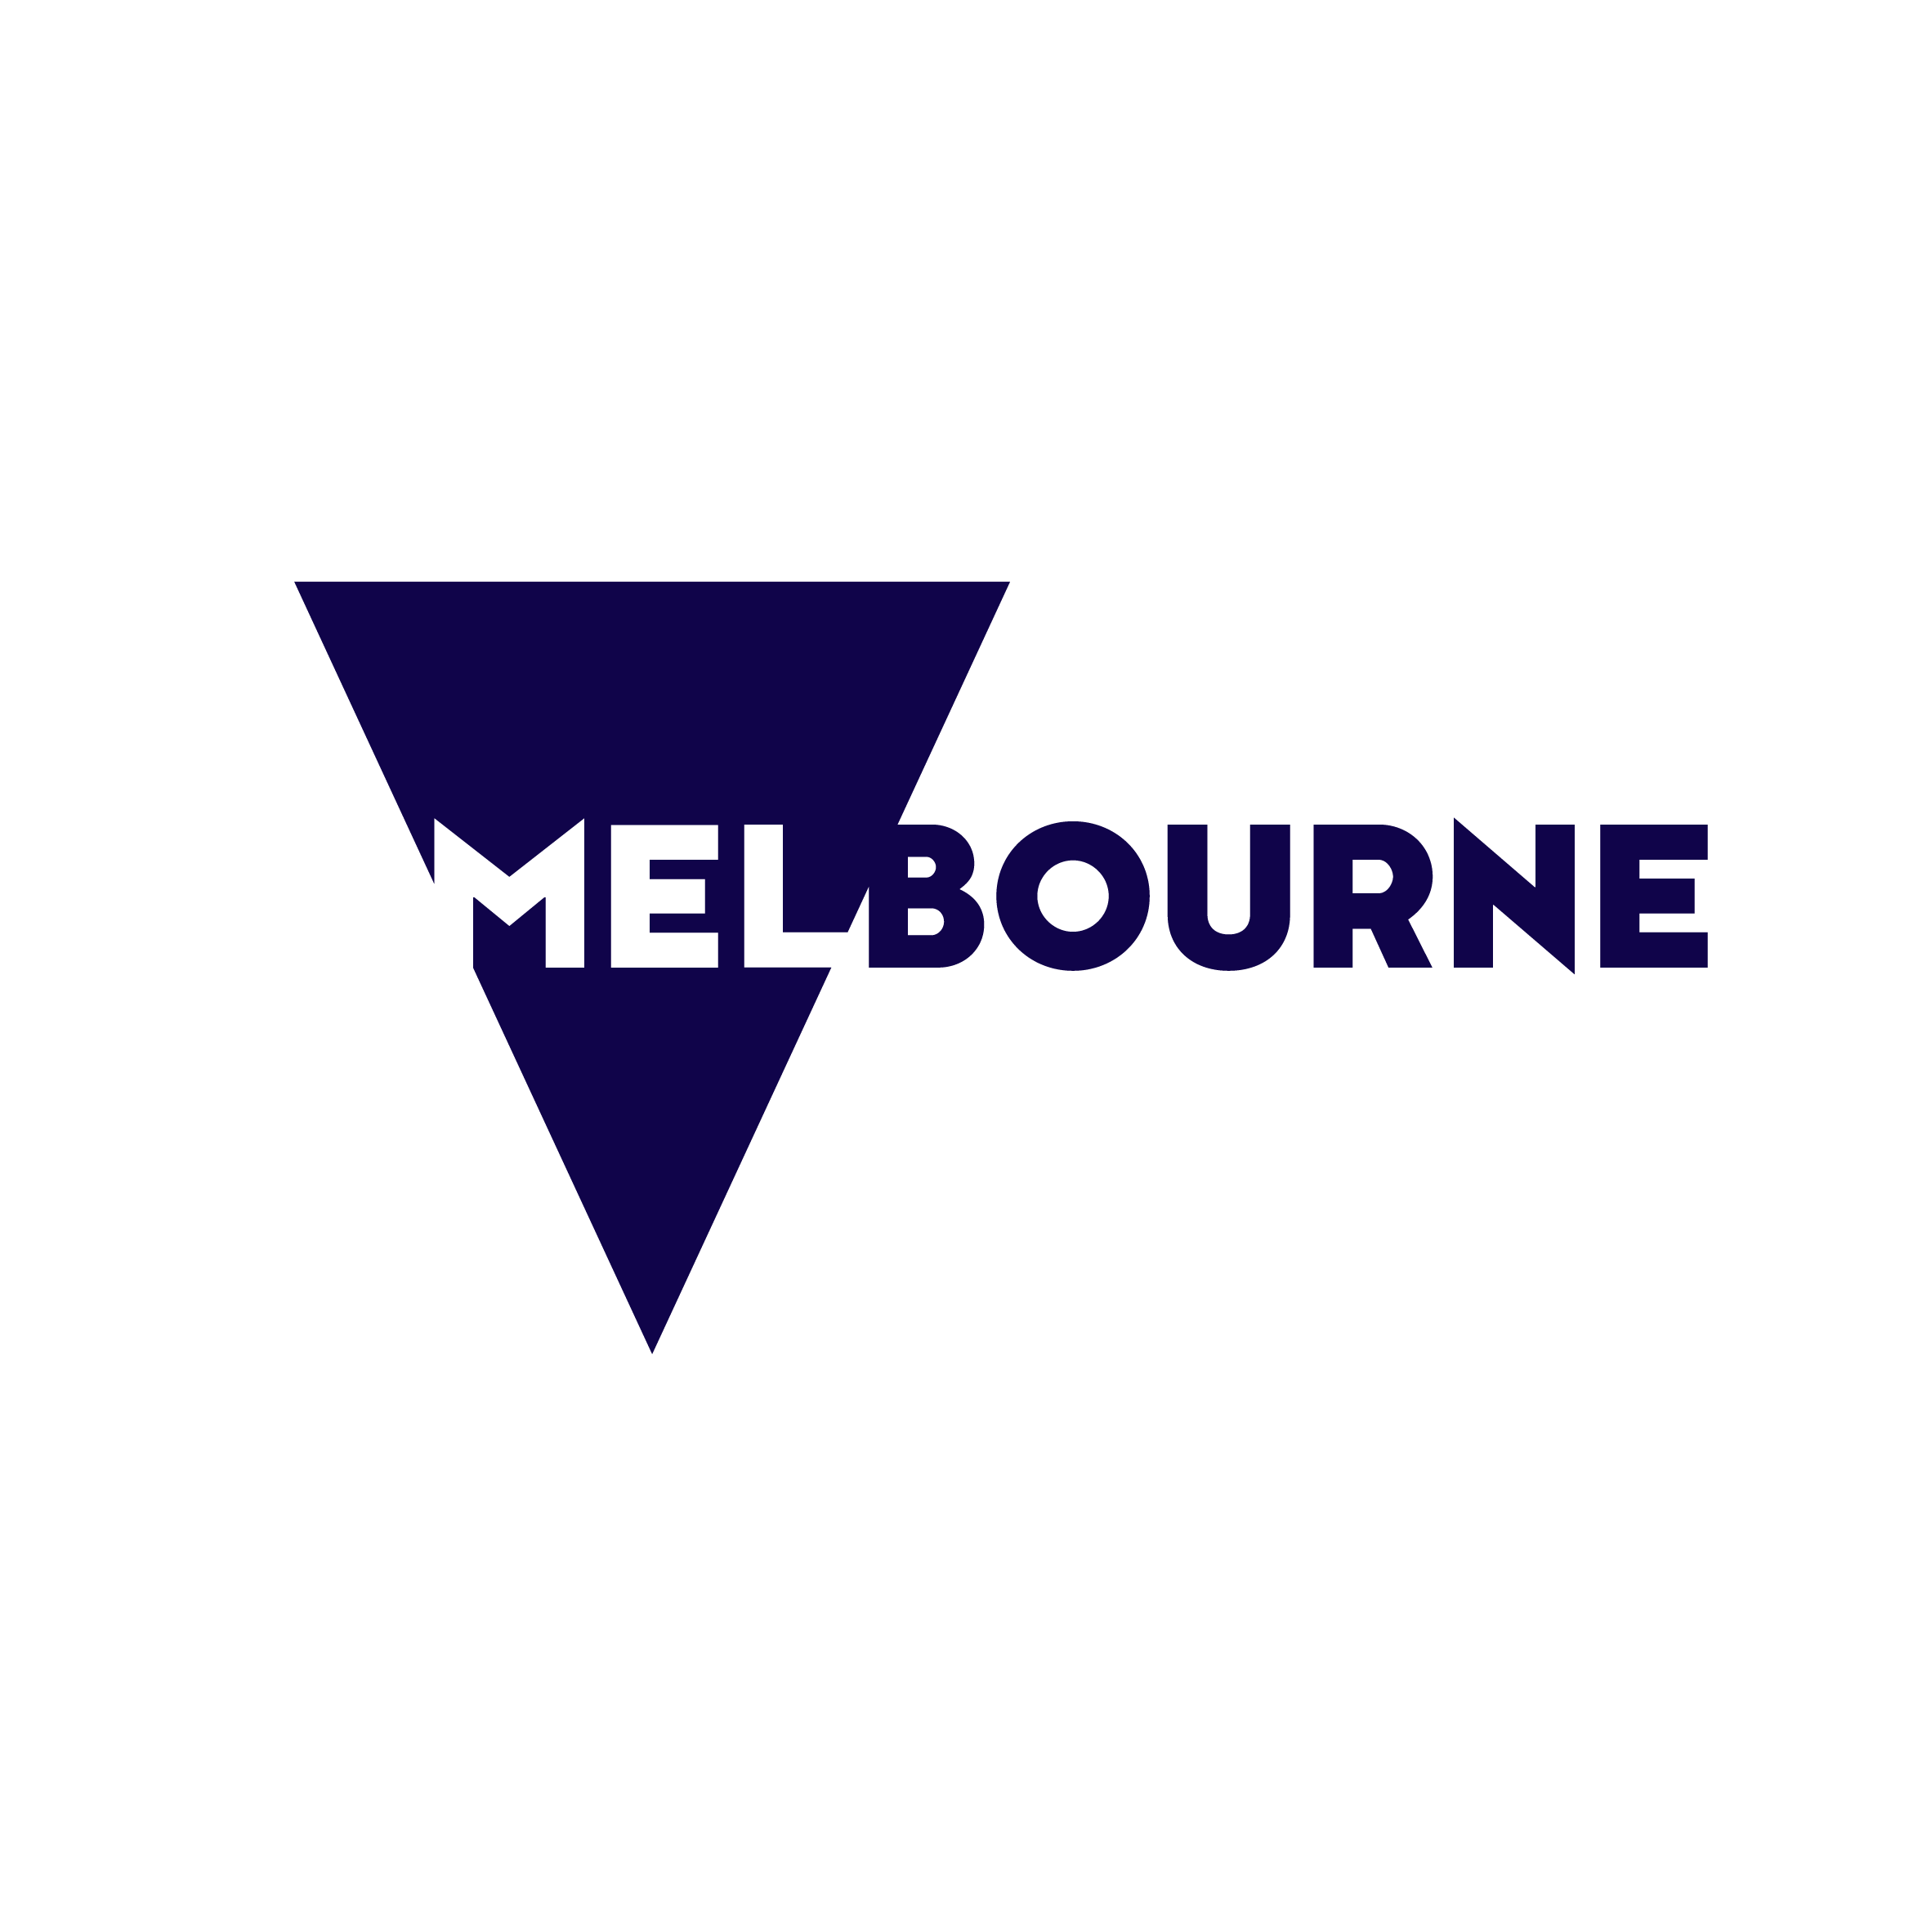 Melbourne-logo-pms2765-2